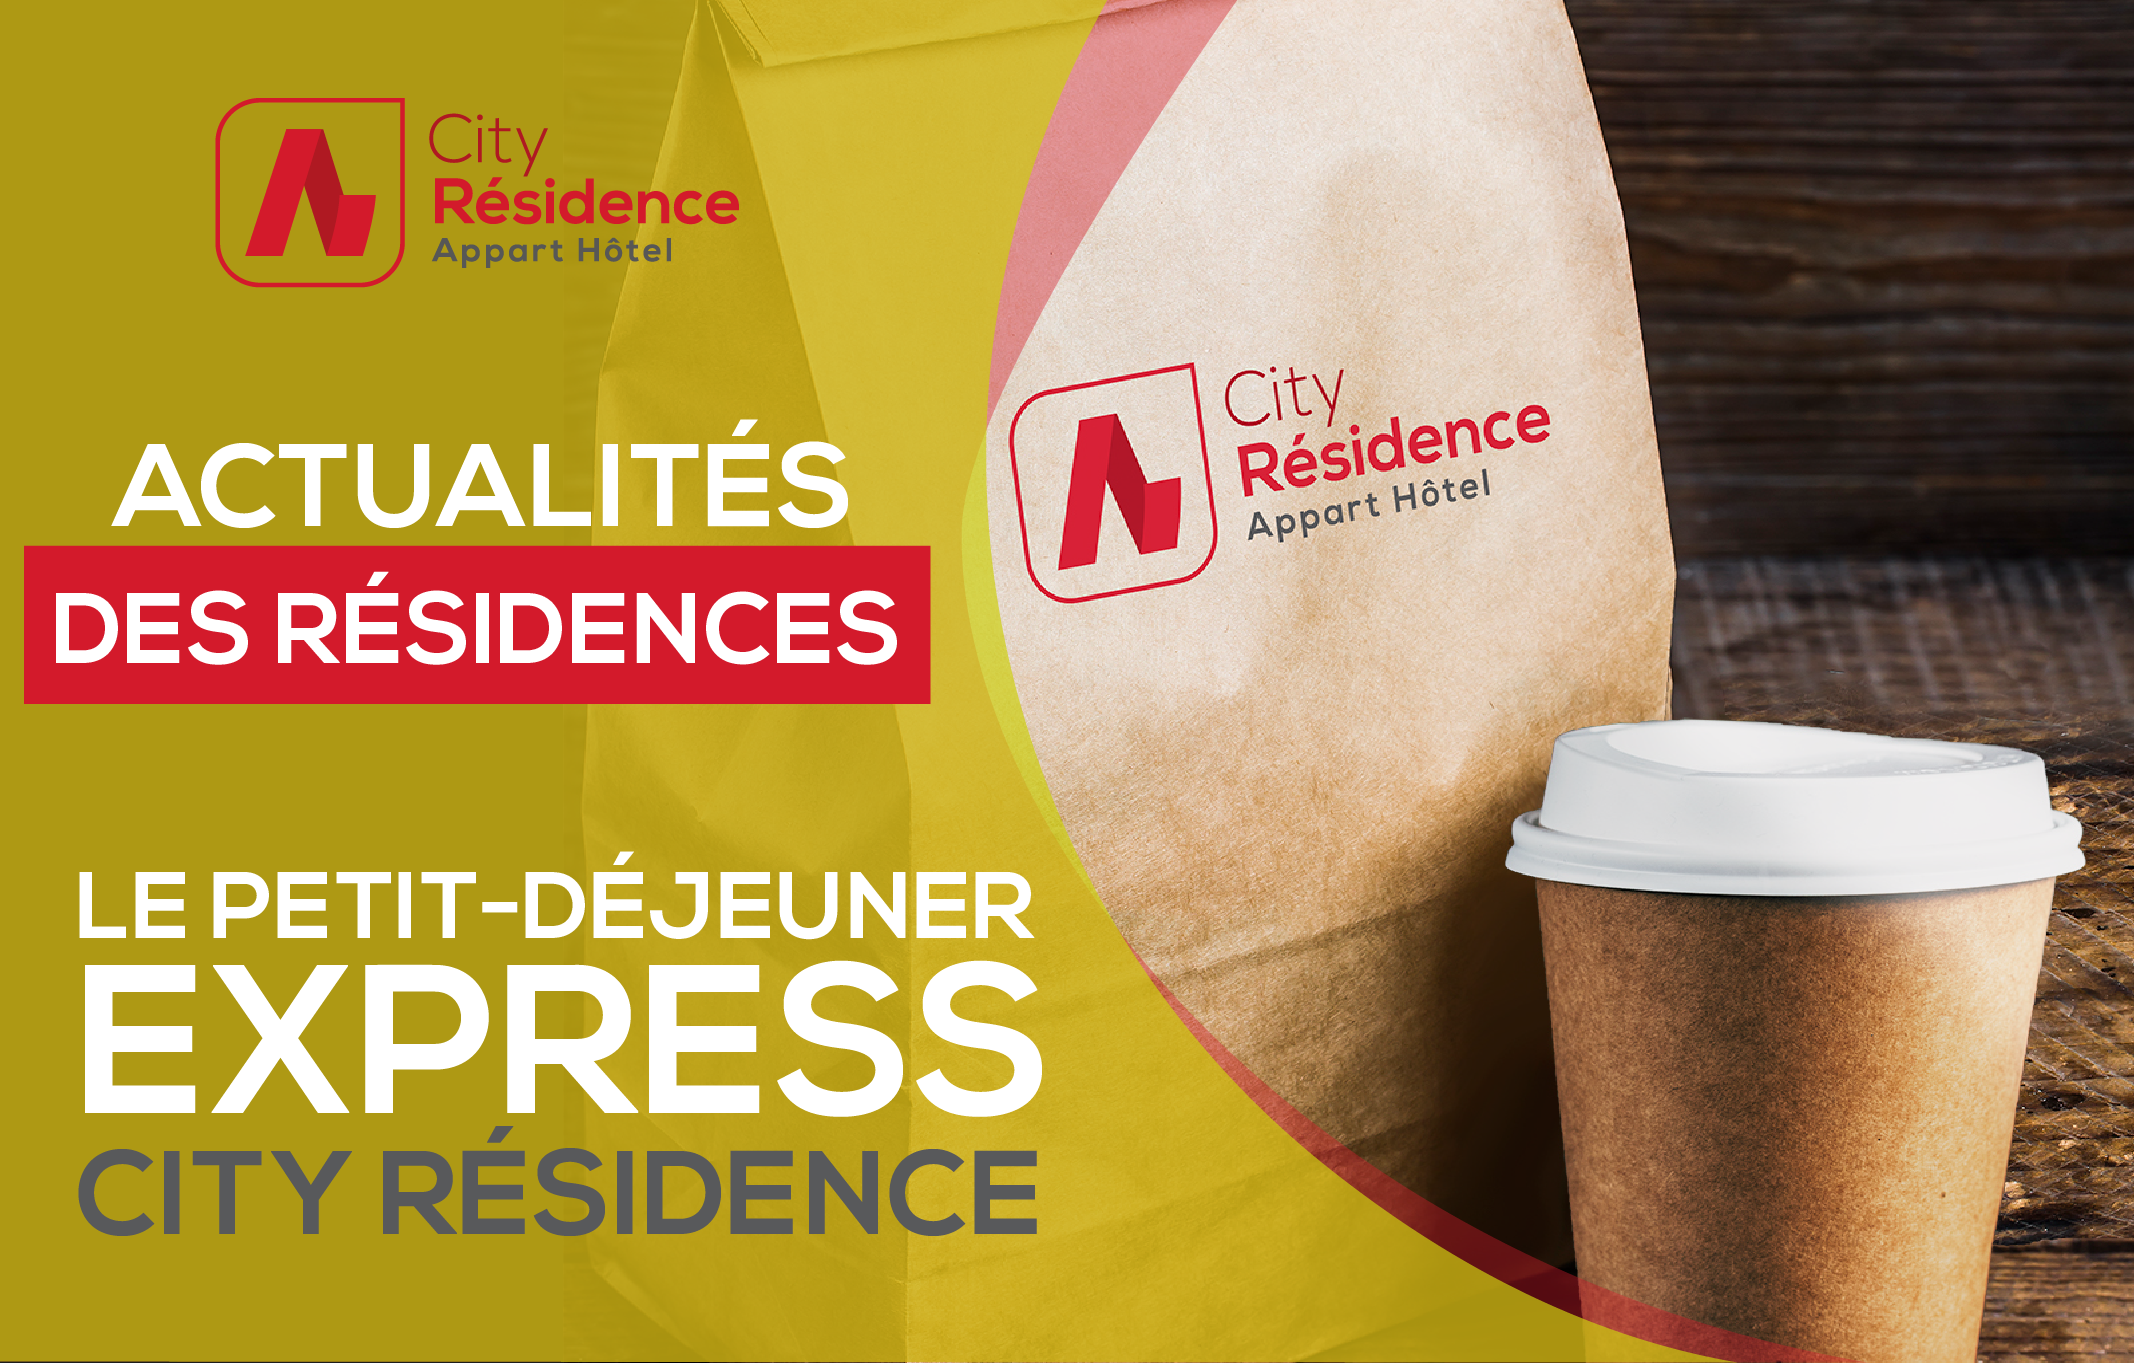 City Residence Express Breakfast! 🥐